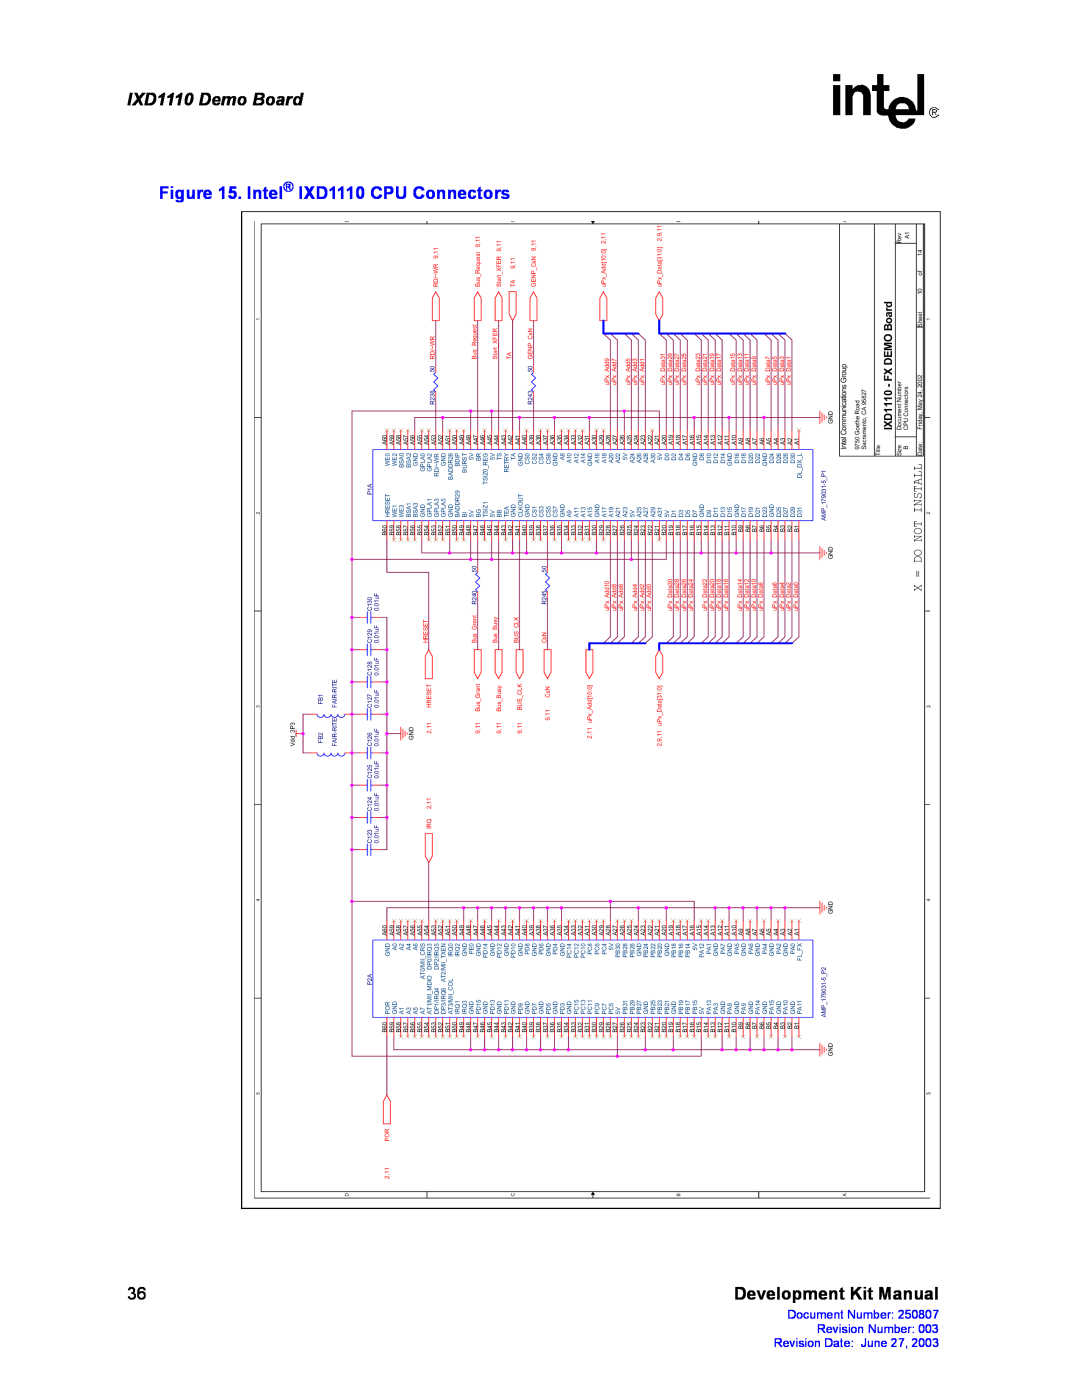 Intel manual Connectors, IXD1110 Demo, Board, Development Kit Manual, Intel, Revision Date June 27, Document Number 